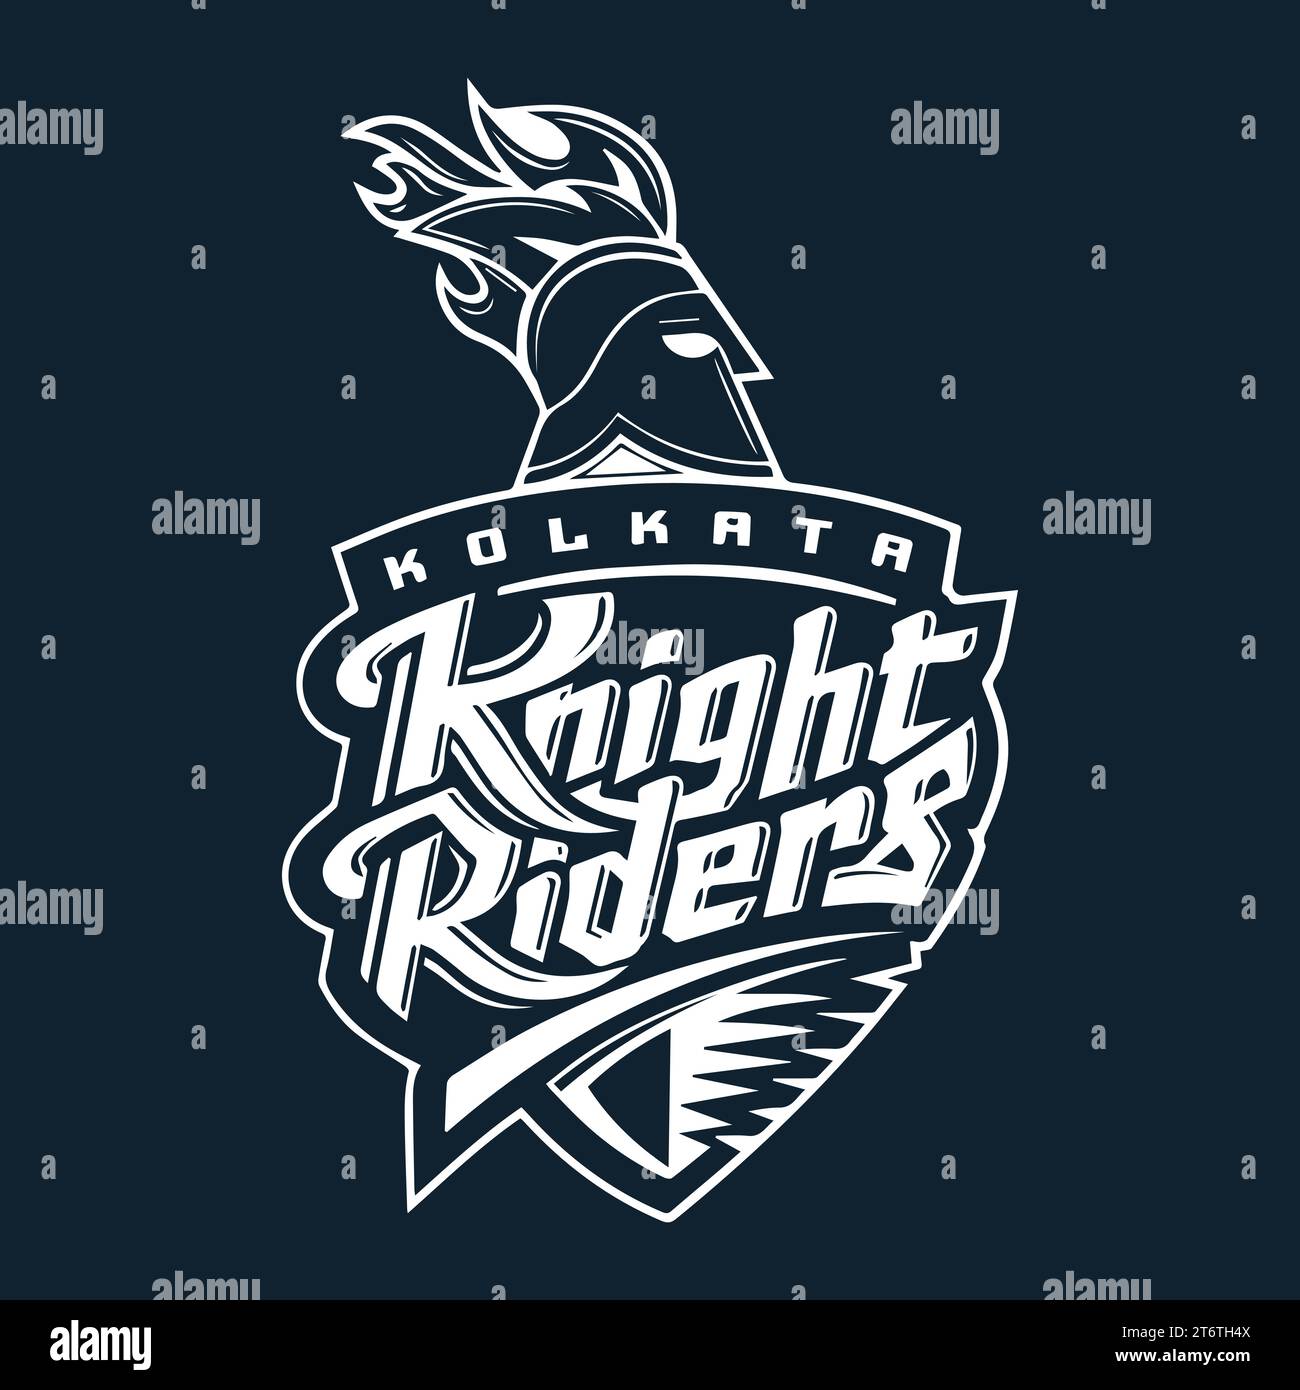 Kolkata Knight Riders Logo White Style Indian professional Cricket club, Vector Illustration Abstract Editable image Stock Vector